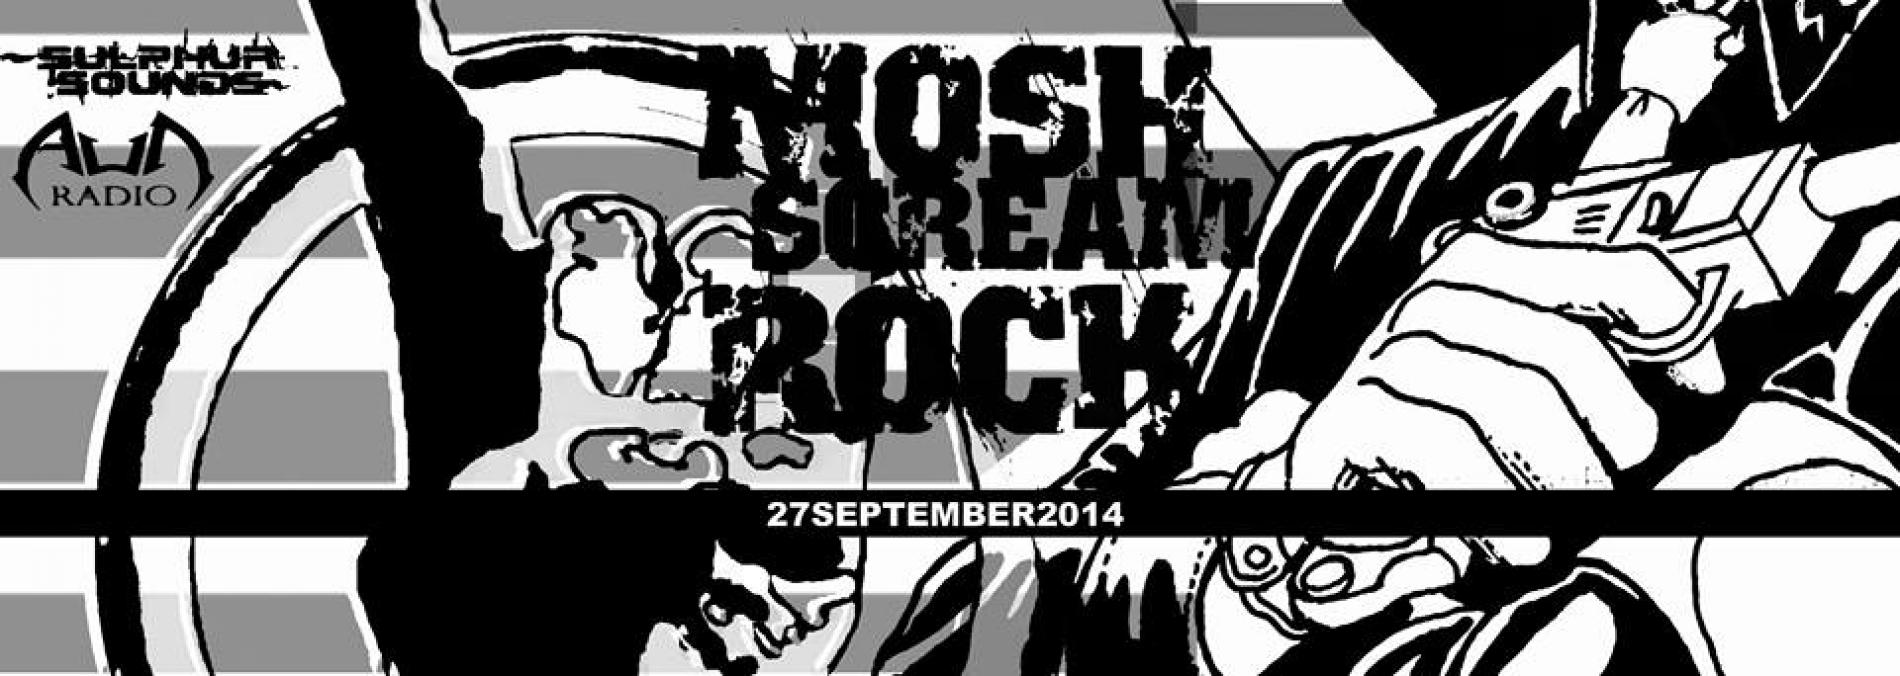 Mosh Scream Rock